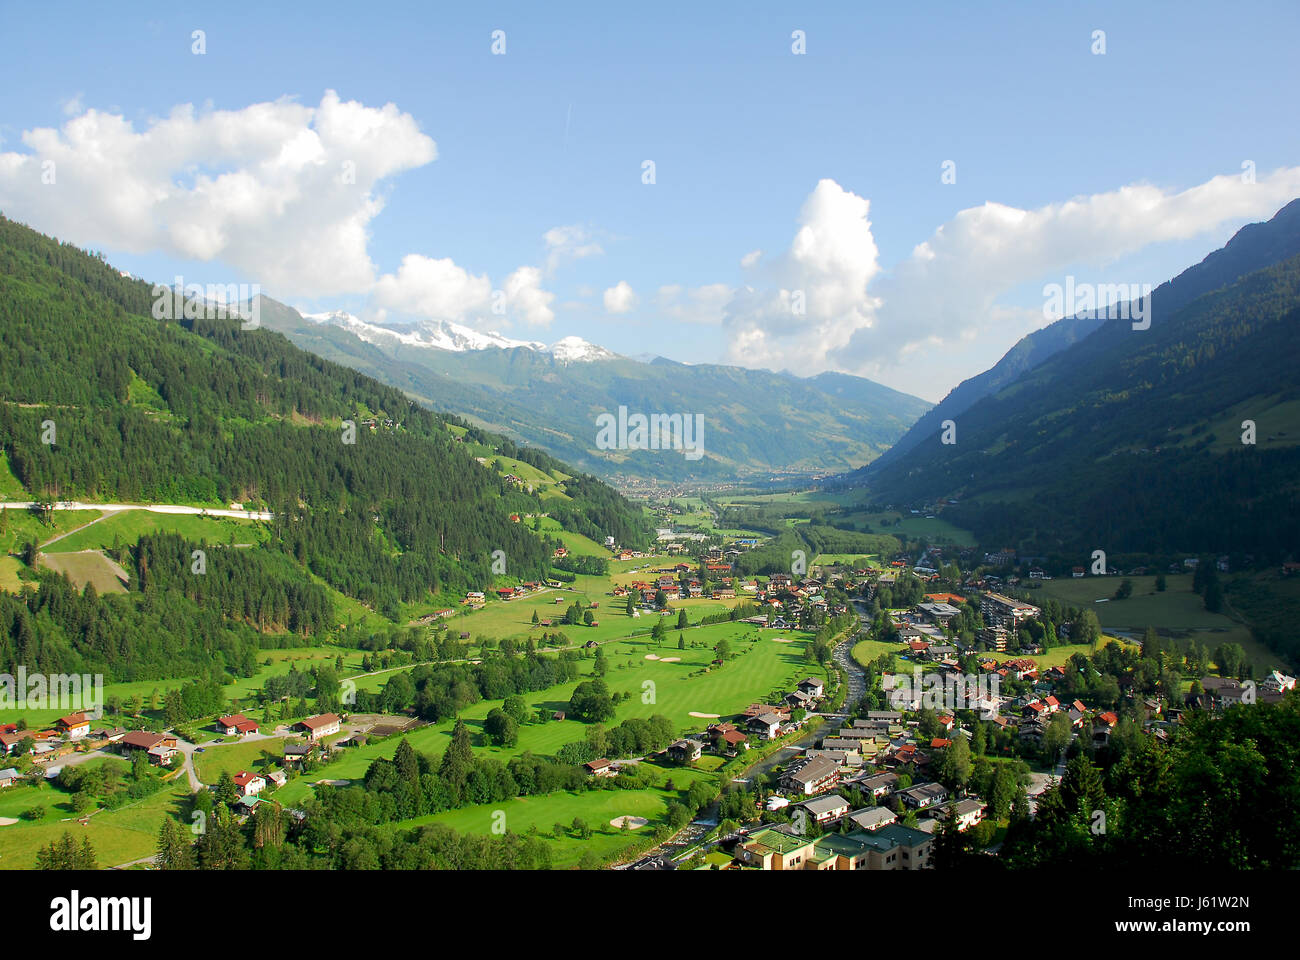 Lo scenario della valle campagna natura austriaci valley resort benessere scenario Foto Stock